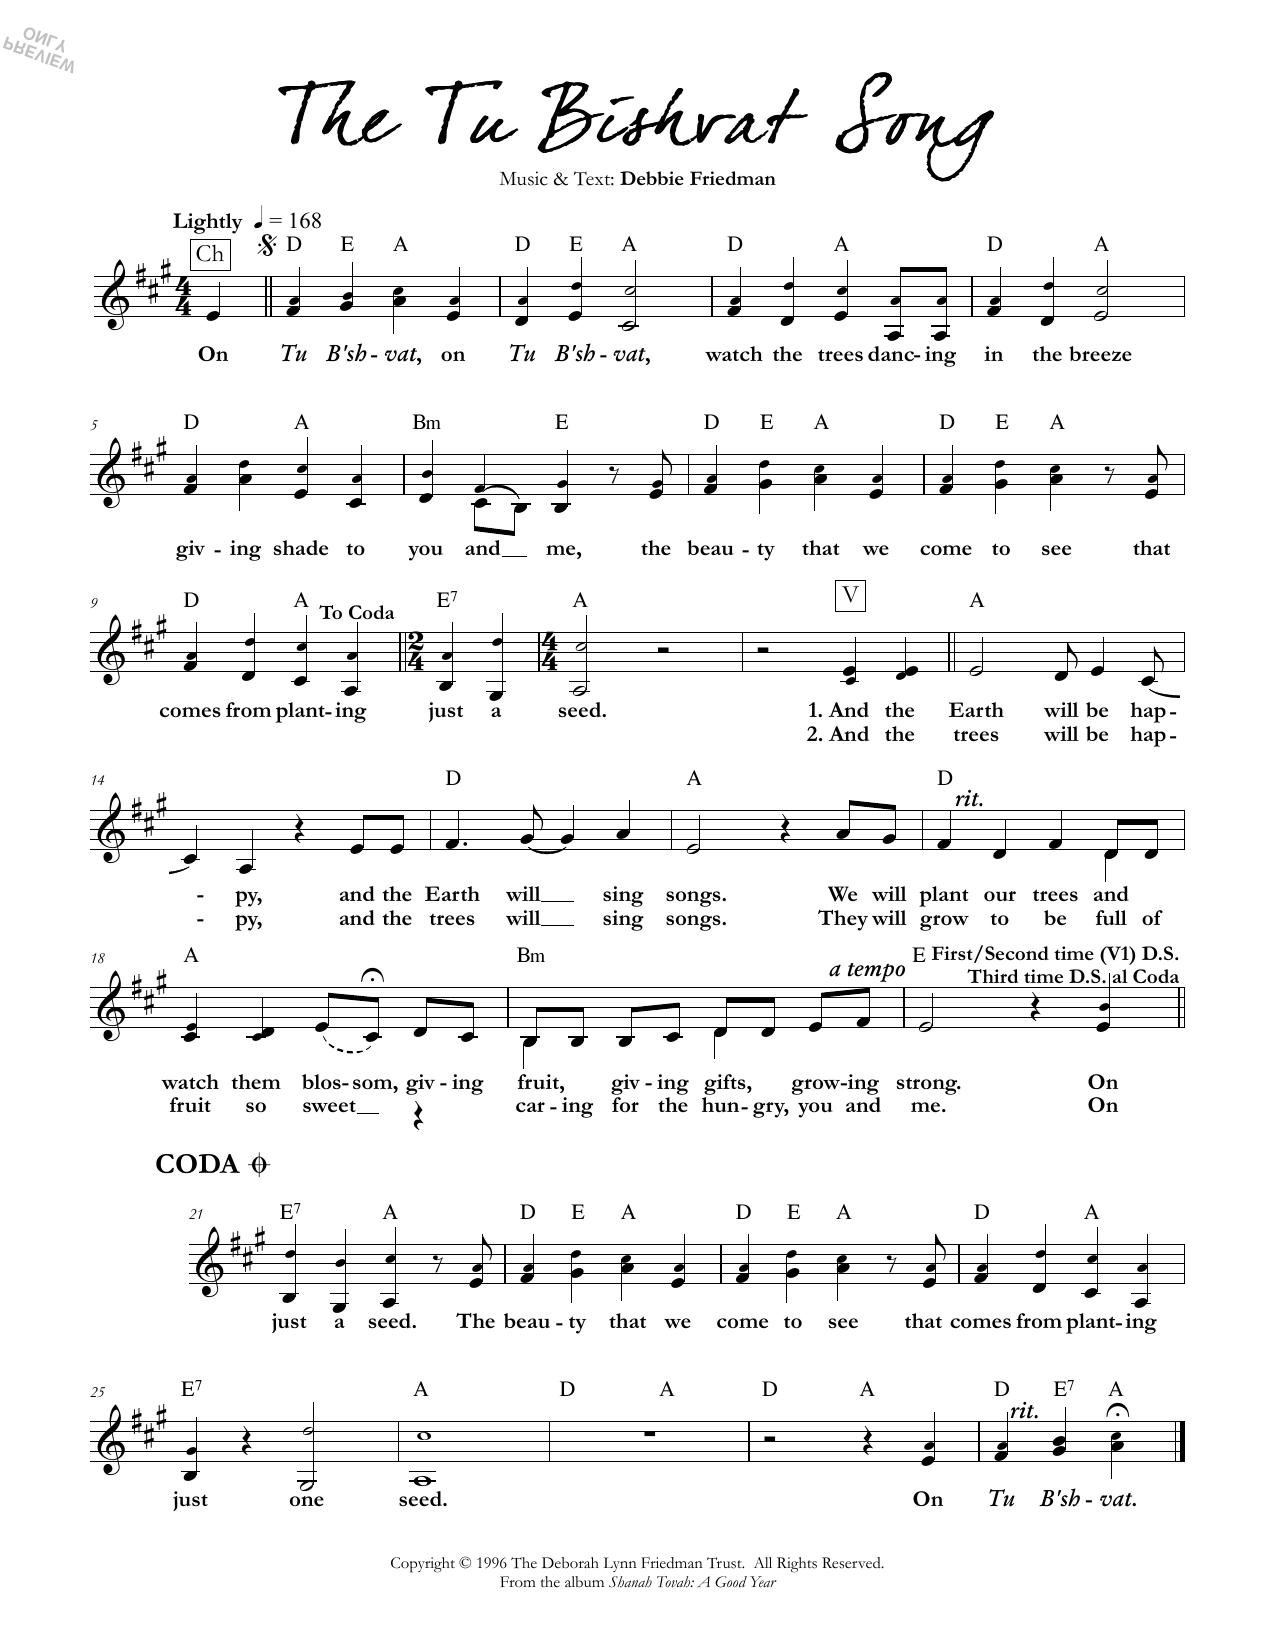 Debbie Friedman The Tu Bishvat Song Sheet Music Notes & Chords for Lead Sheet / Fake Book - Download or Print PDF